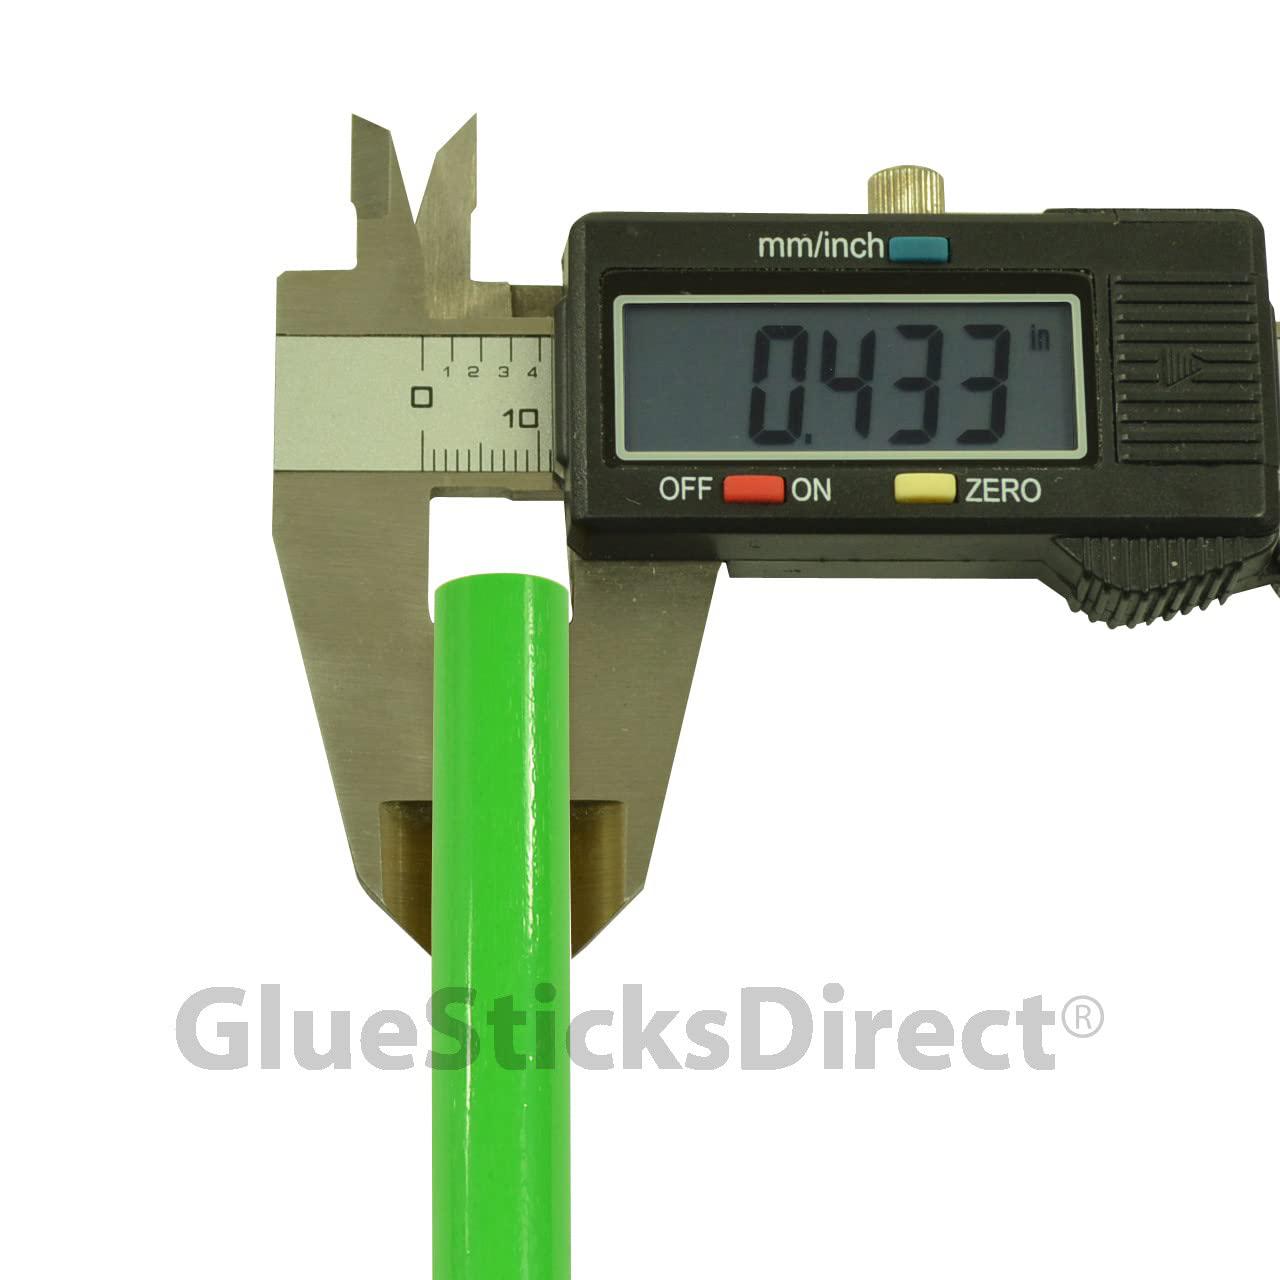 GlueSticksDirect.com gluesticksdirect mint green colored glue sticks for hot, cool and dual temp glue guns, large bulk 5 lb box - 7/16" x 4"